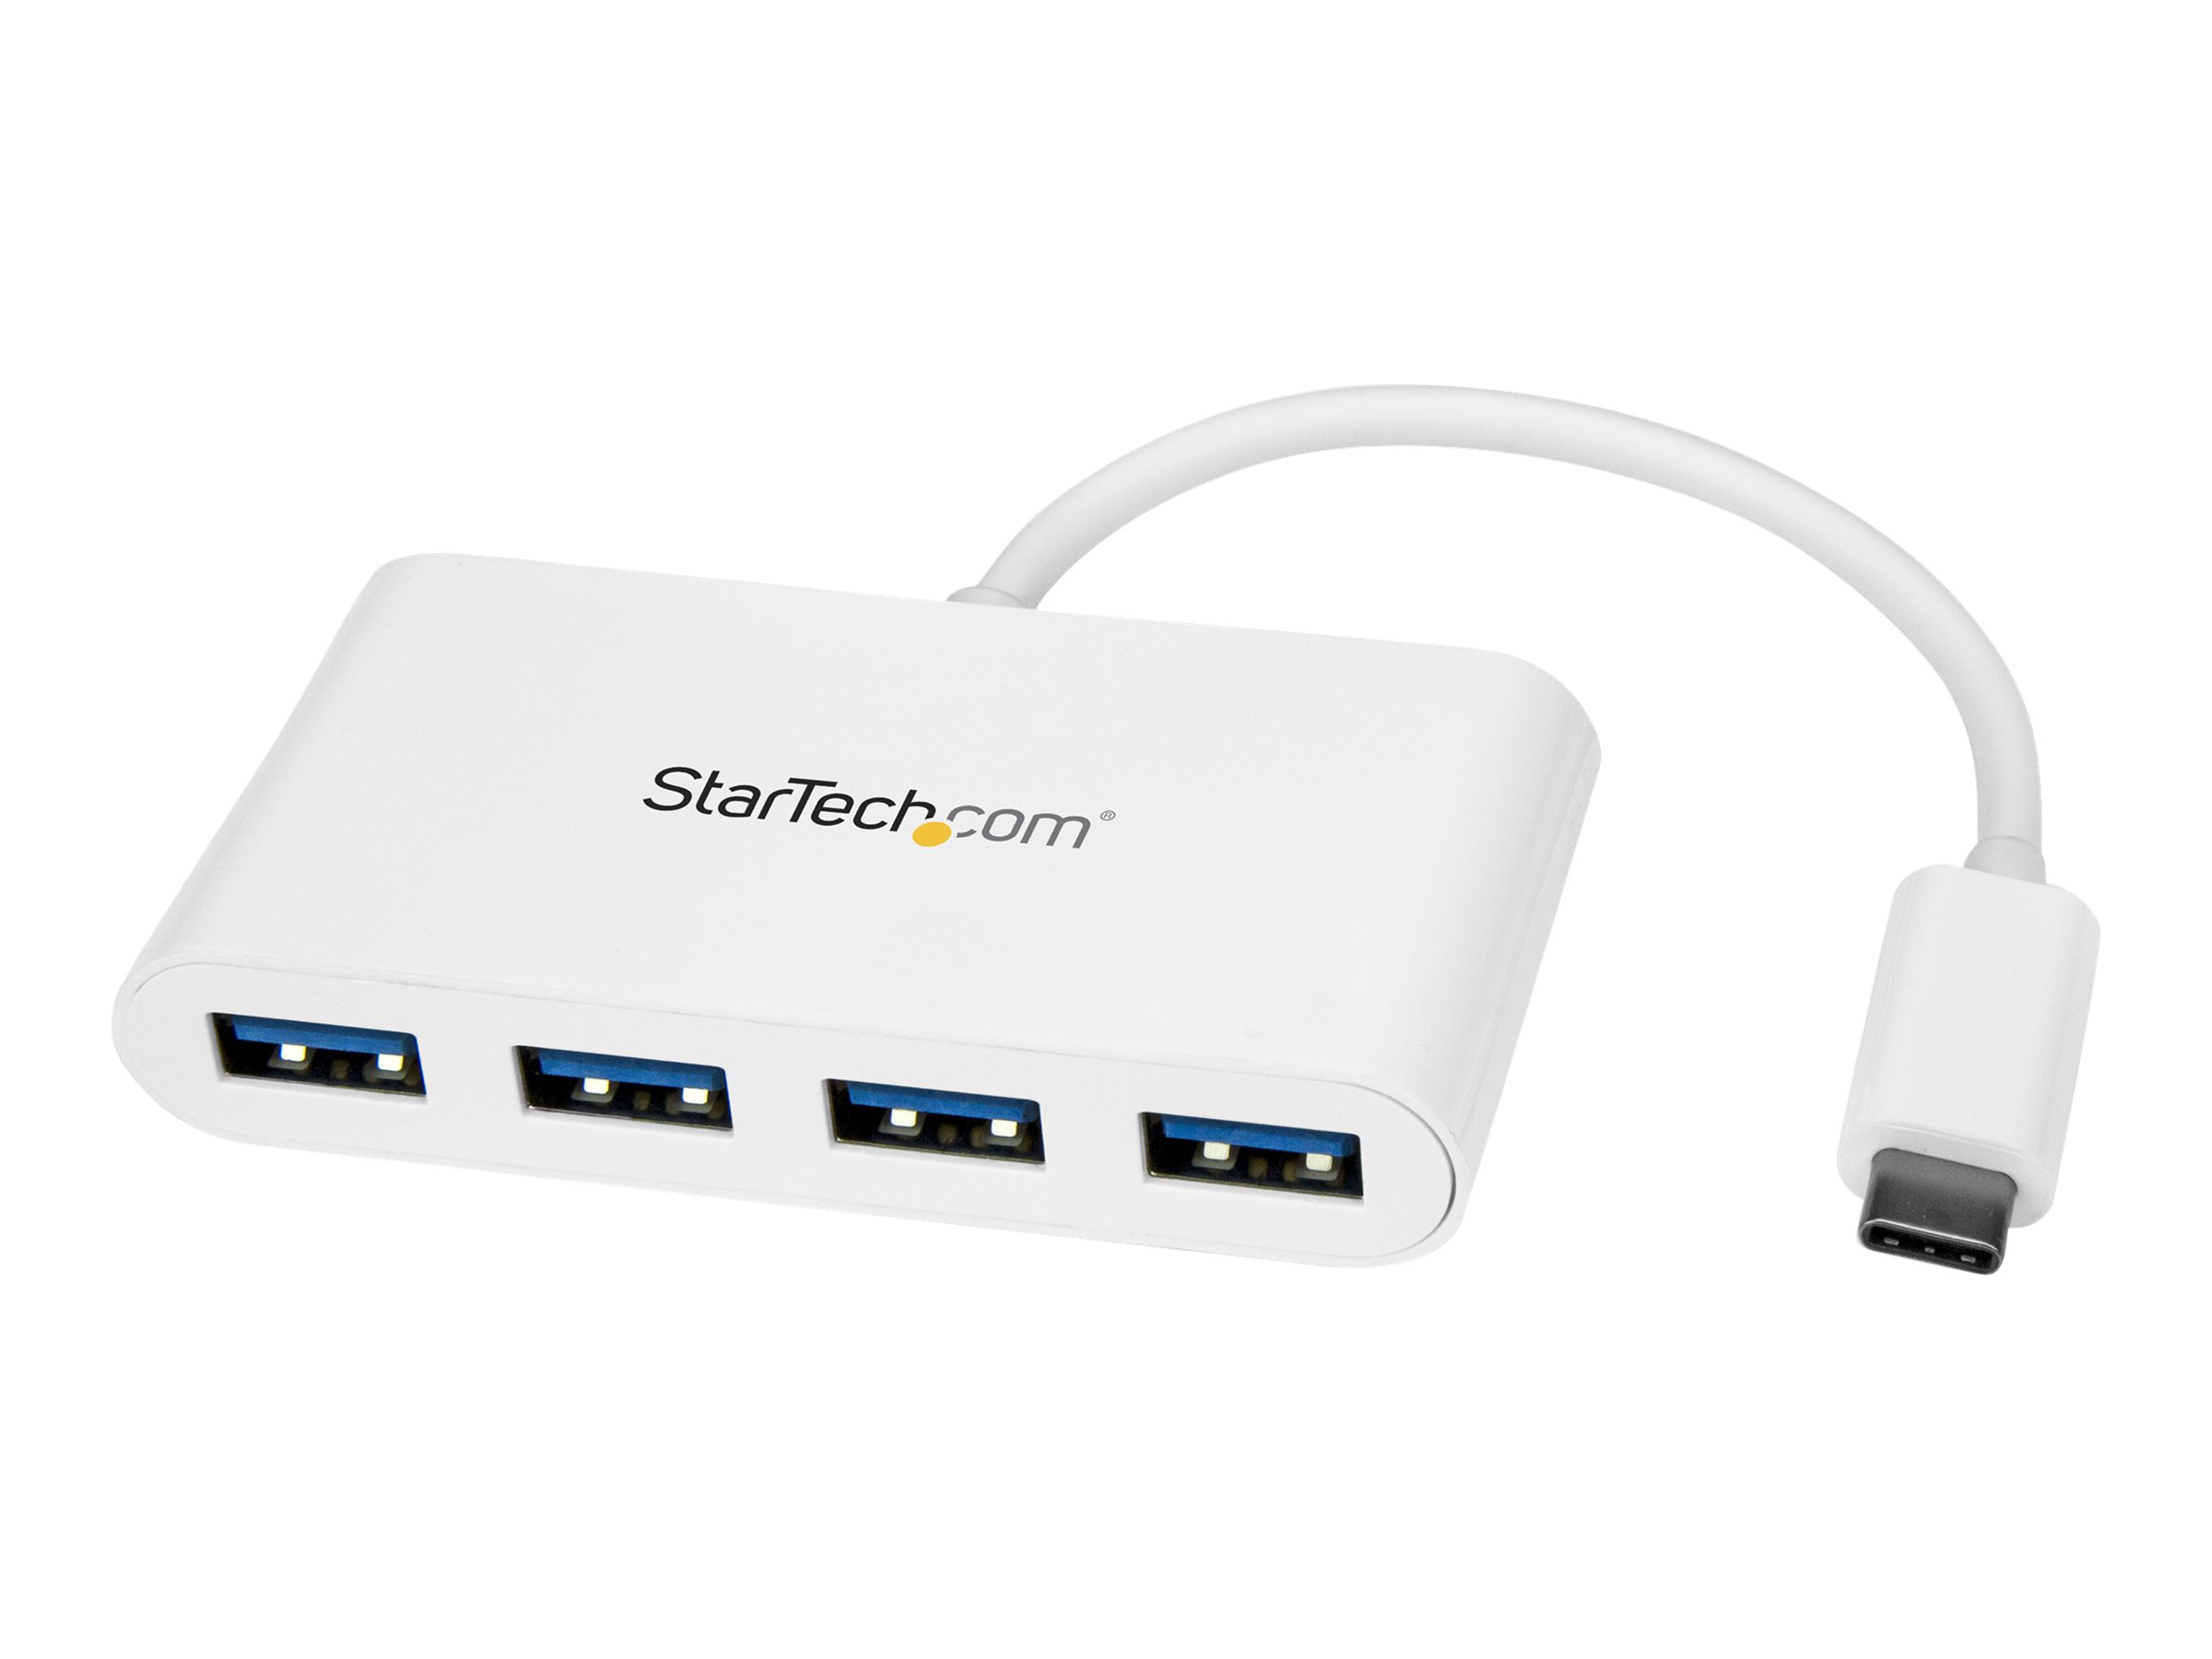 StarTech.com 4 Port USB C Hub with 4x USB-A Ports (USB 3.0 SuperSpeed 5Gbps), USB Bus Powered, Portable/Laptop USB-C to USB-A Adapter Hub, USB 3.1 Gen 1/USB 3.2 Gen 1 Type-C Hub, White